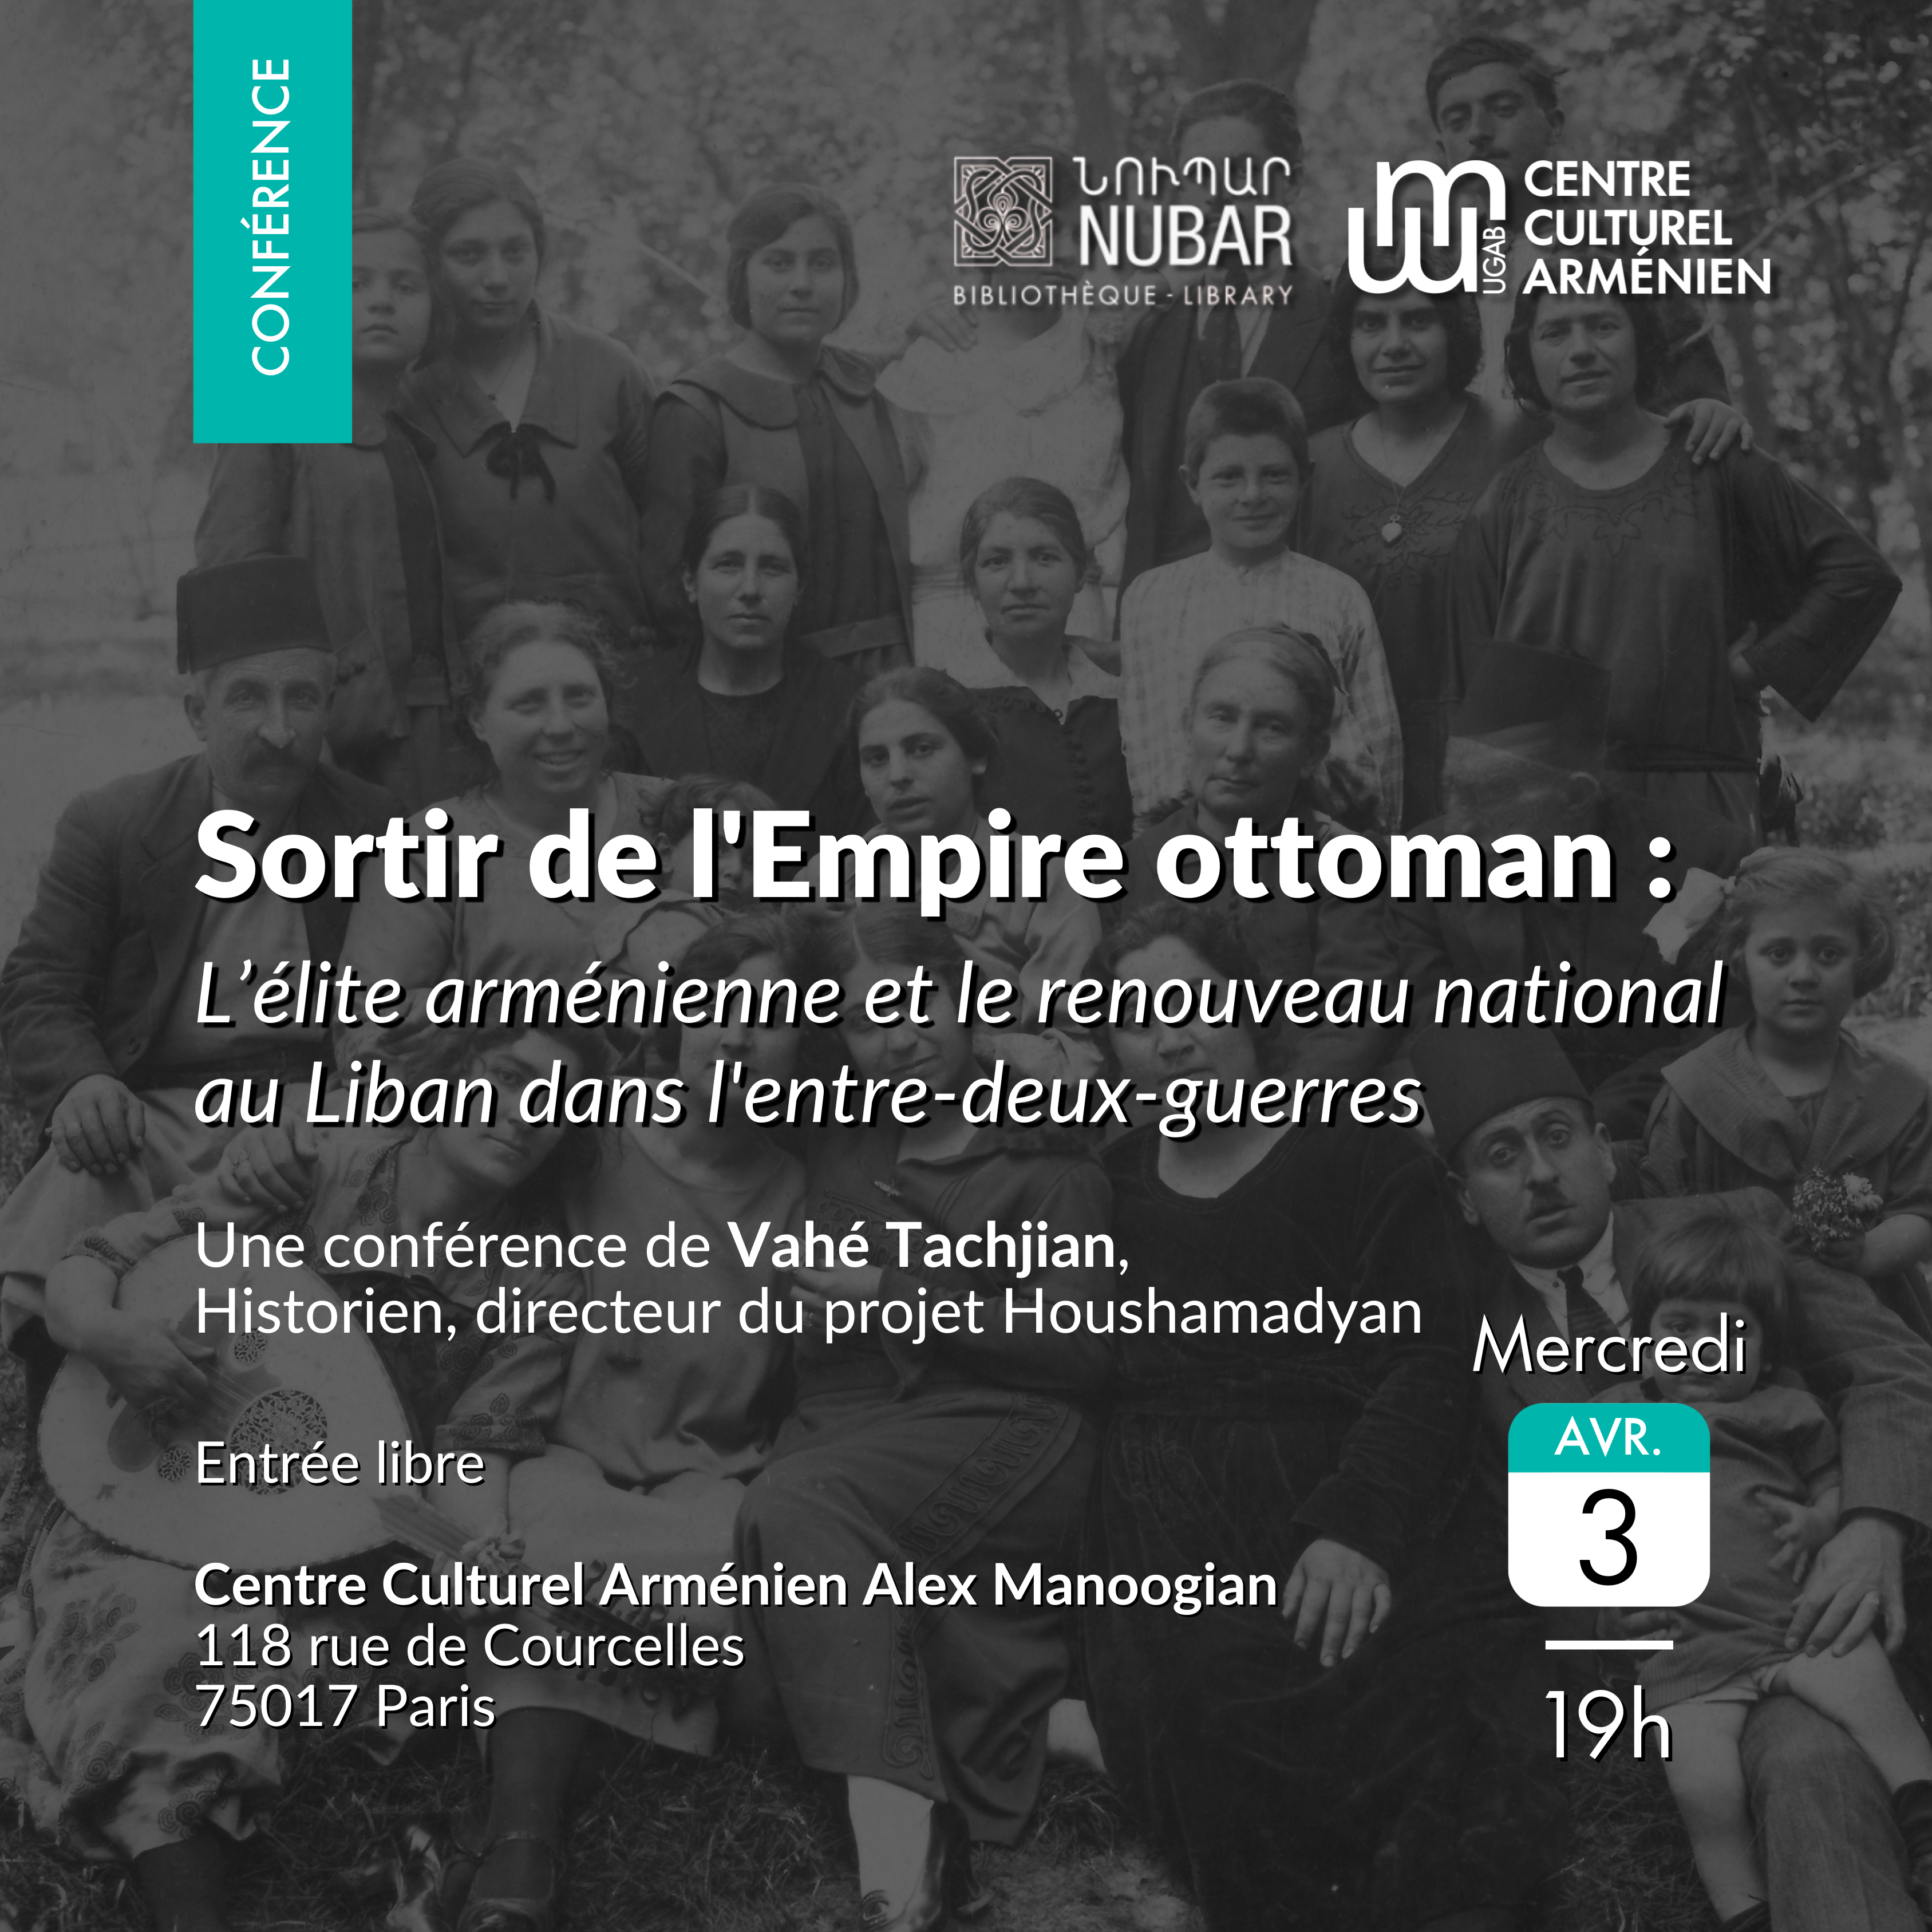 "Sortir de l'Empire ottoman" - Conférence de Vahé Tachjian